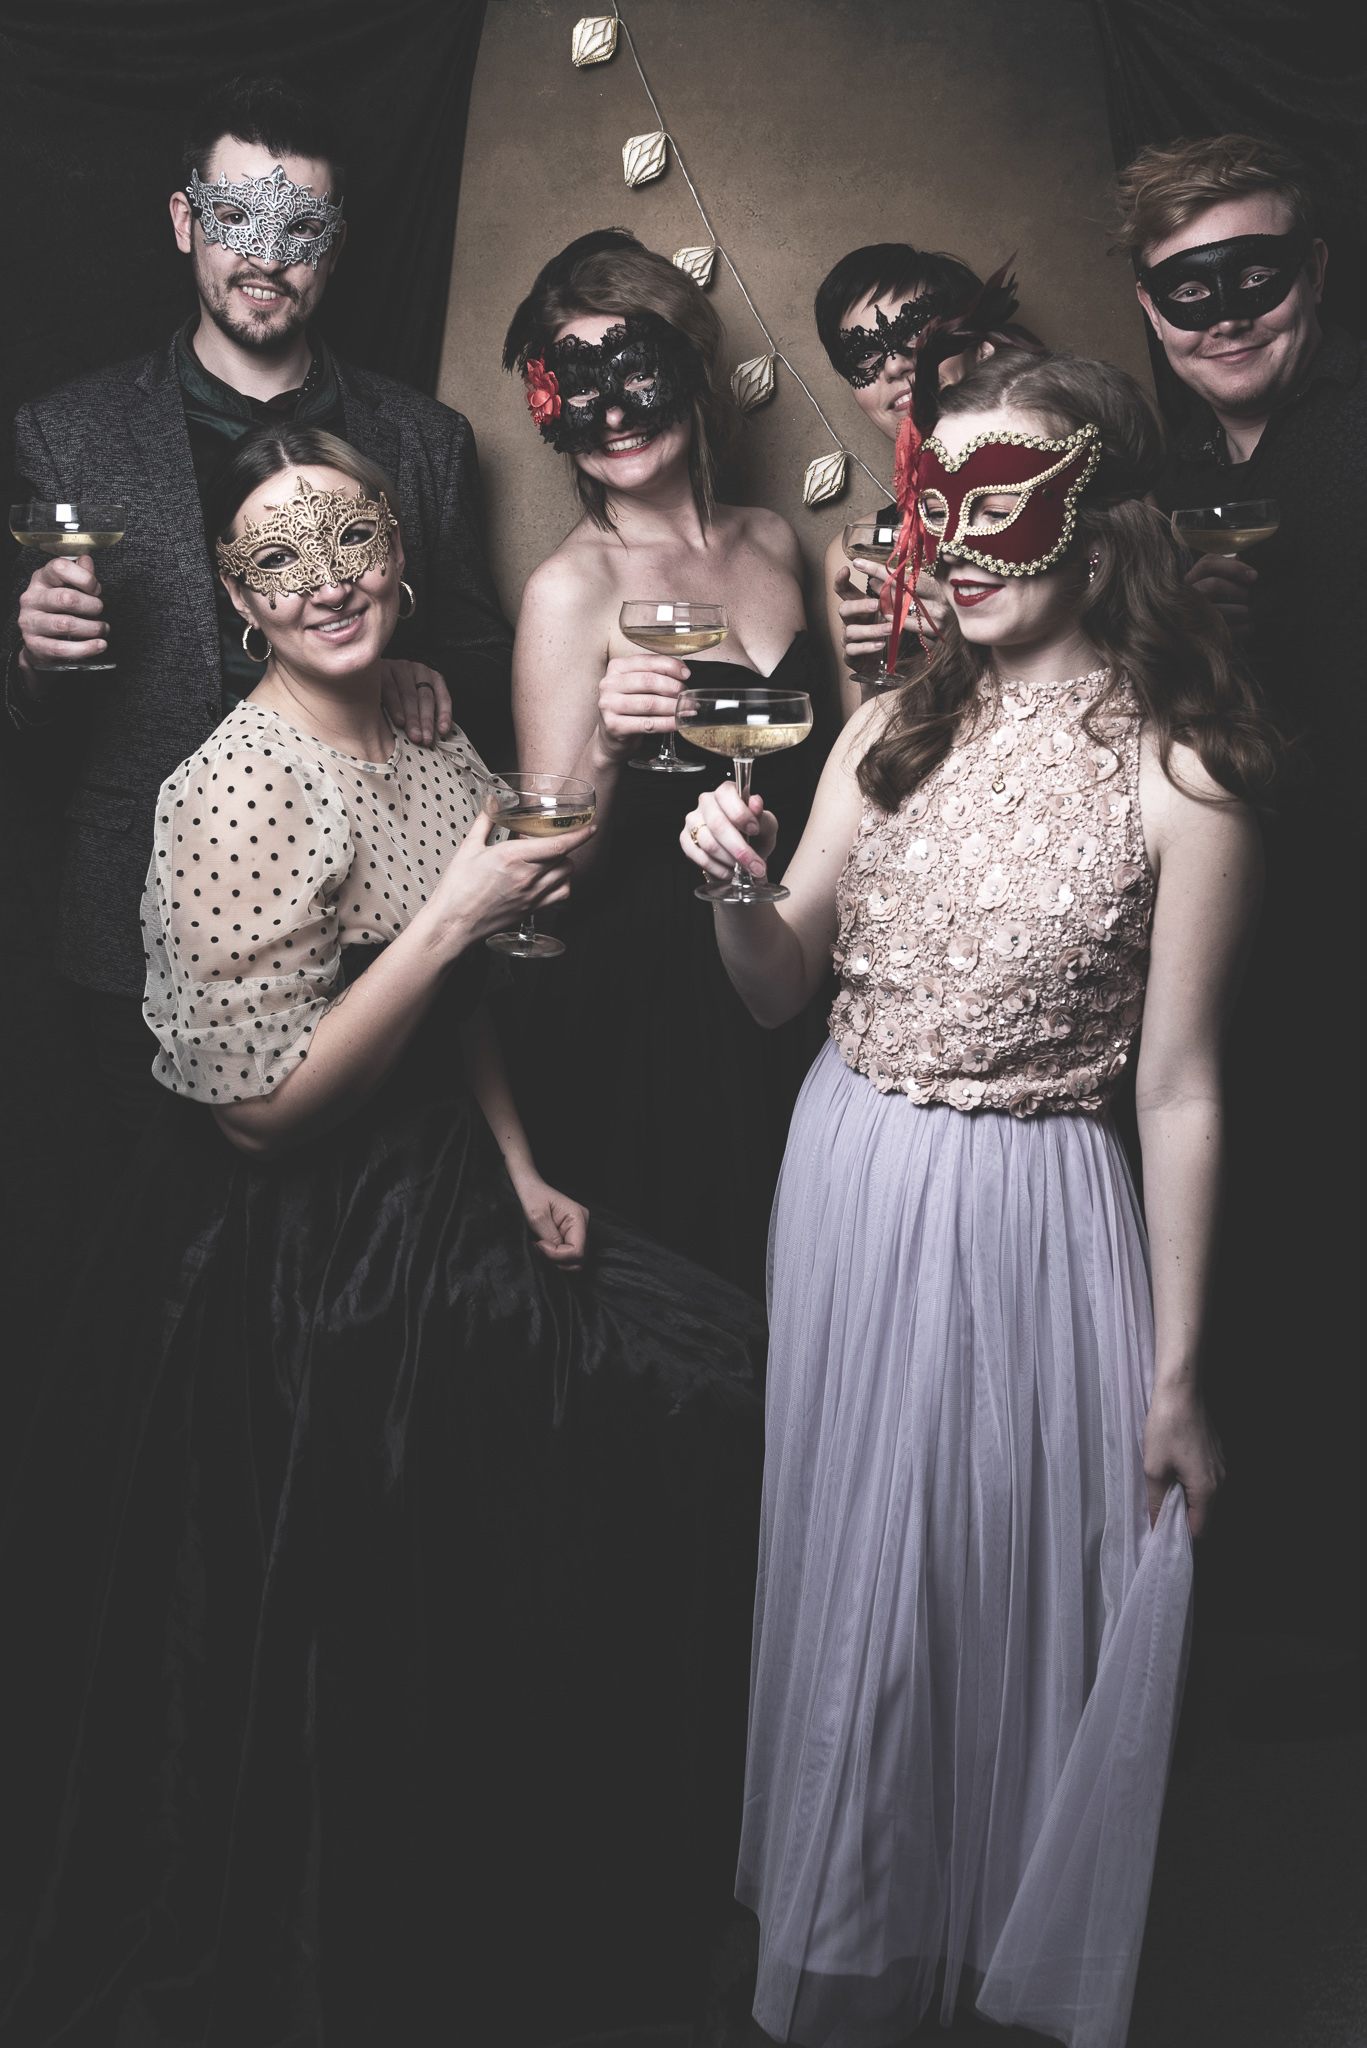 masqurade, maskerade, bal, ball, photobooth, new year party, nytårsfest, ball dress, balkjoler, masques, masker, champagne